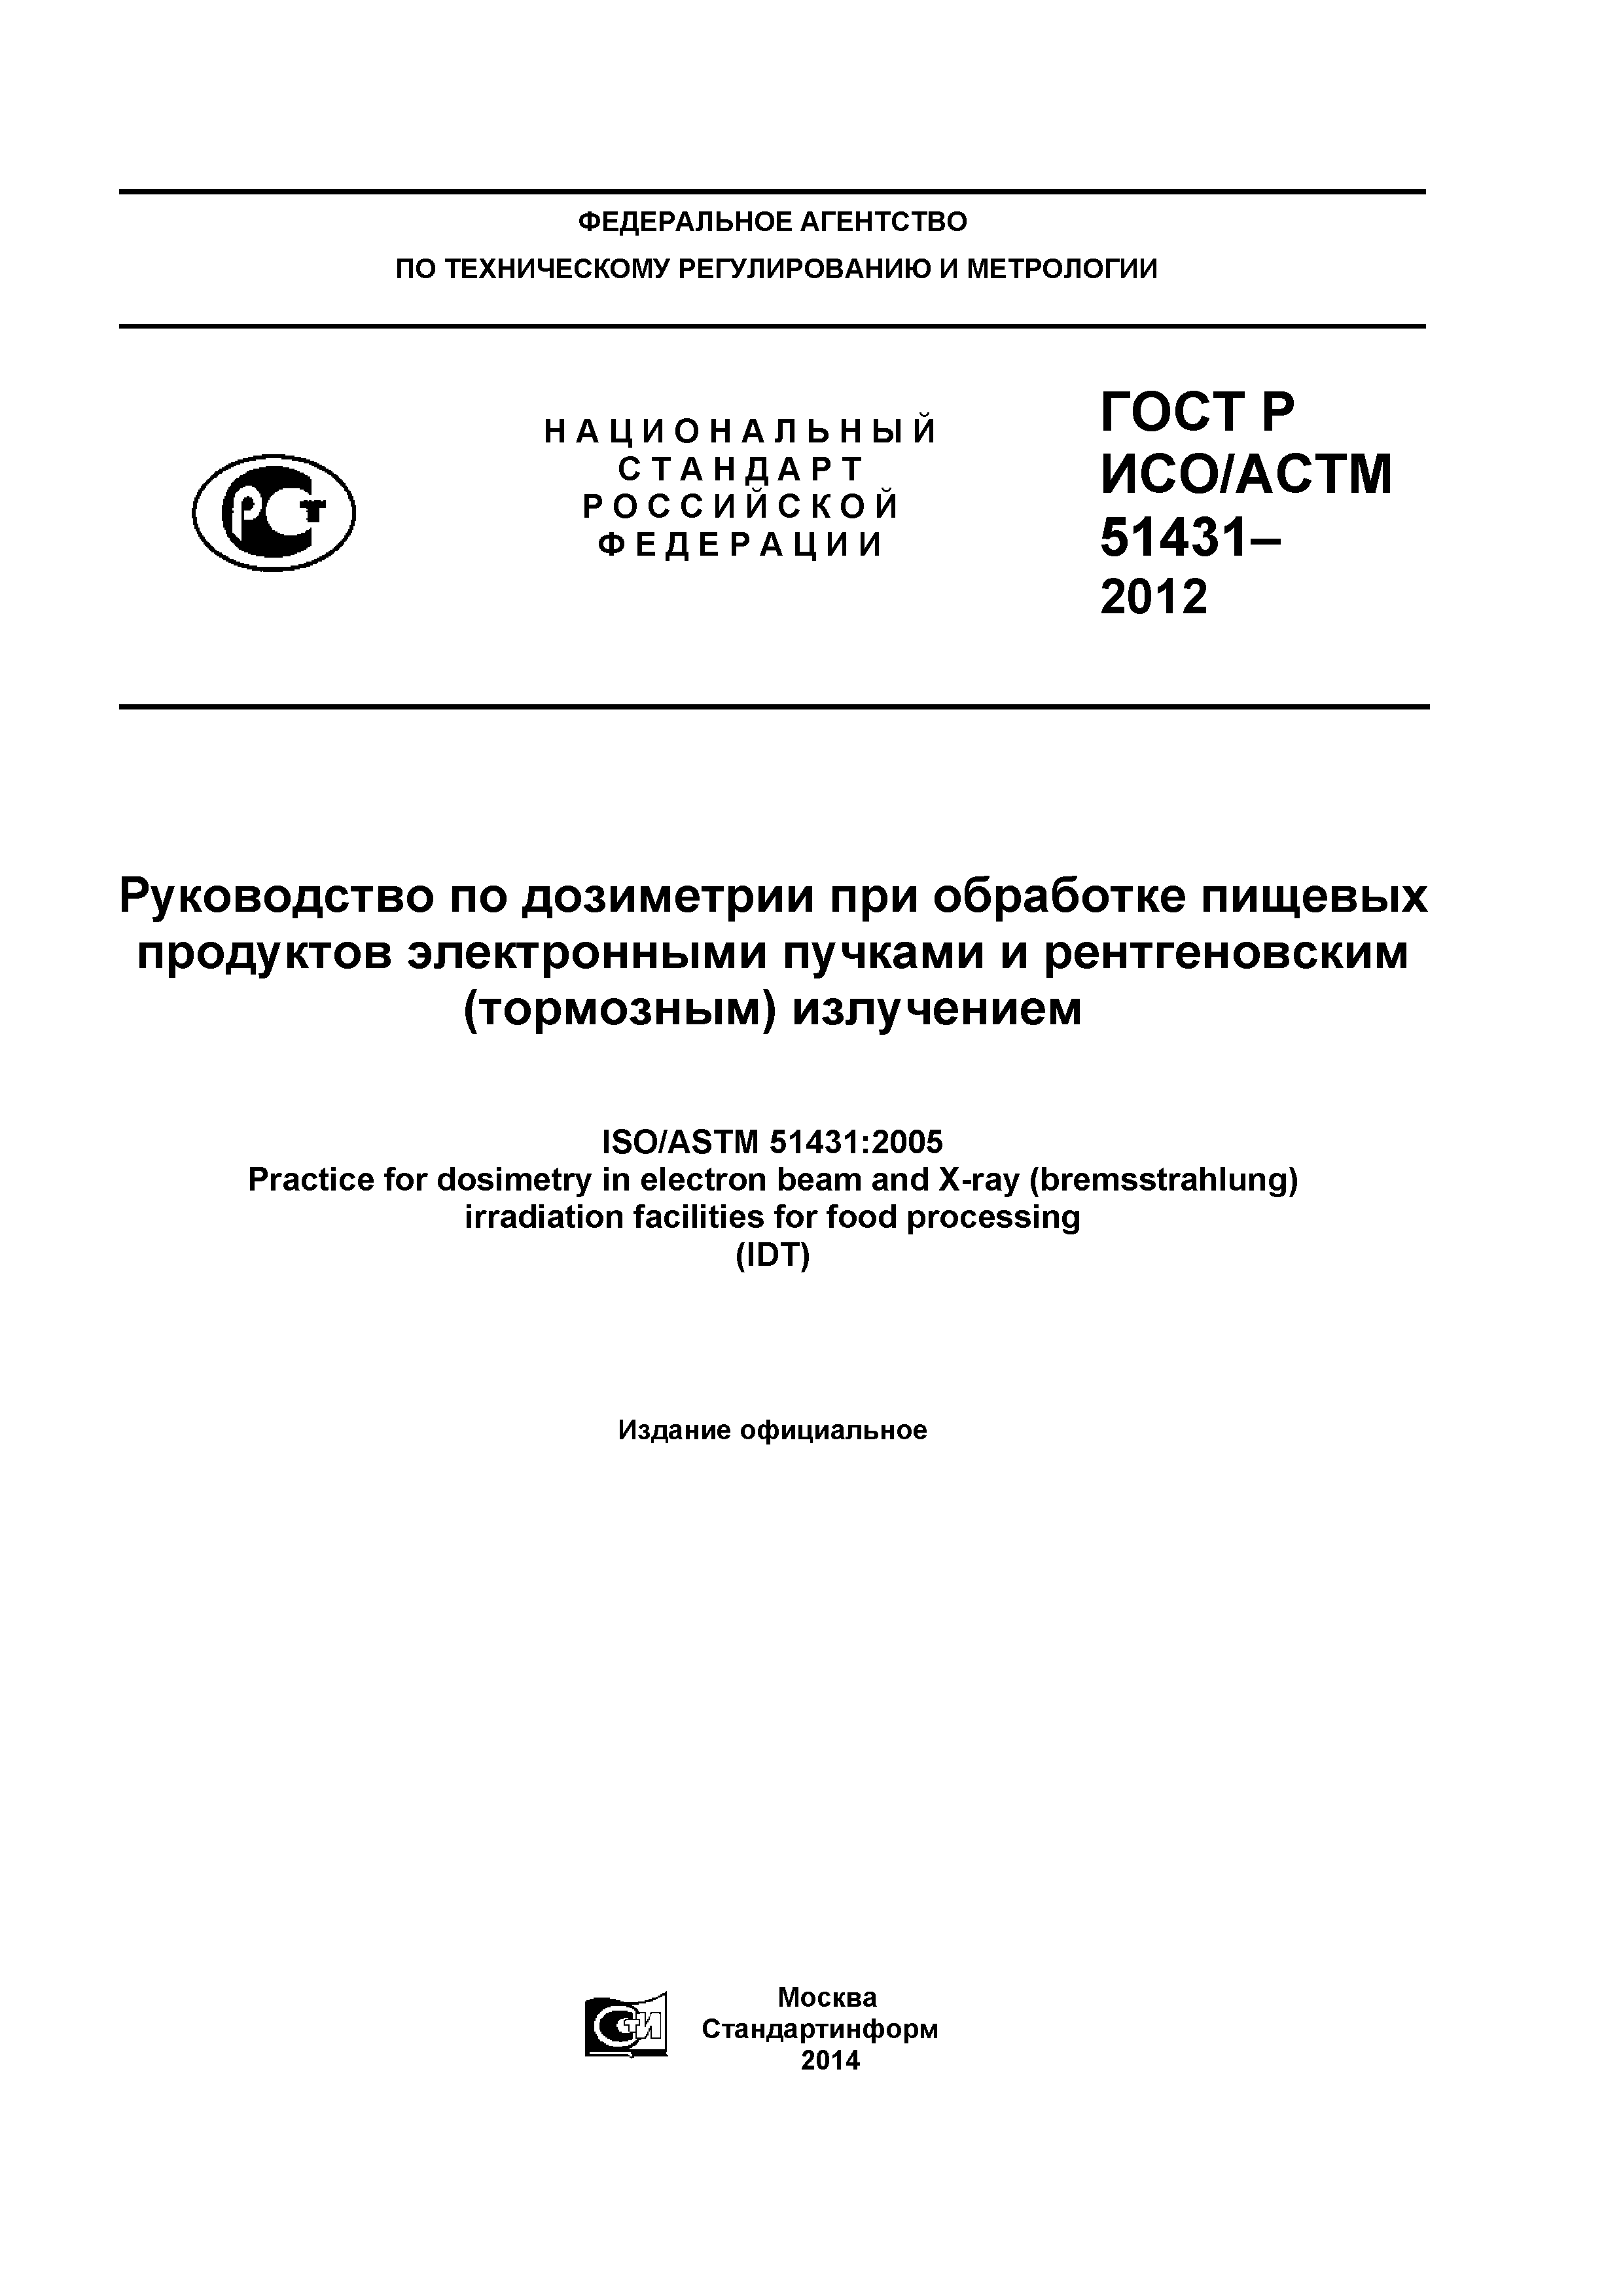 ГОСТ Р ИСО/АСТМ 51431-2012